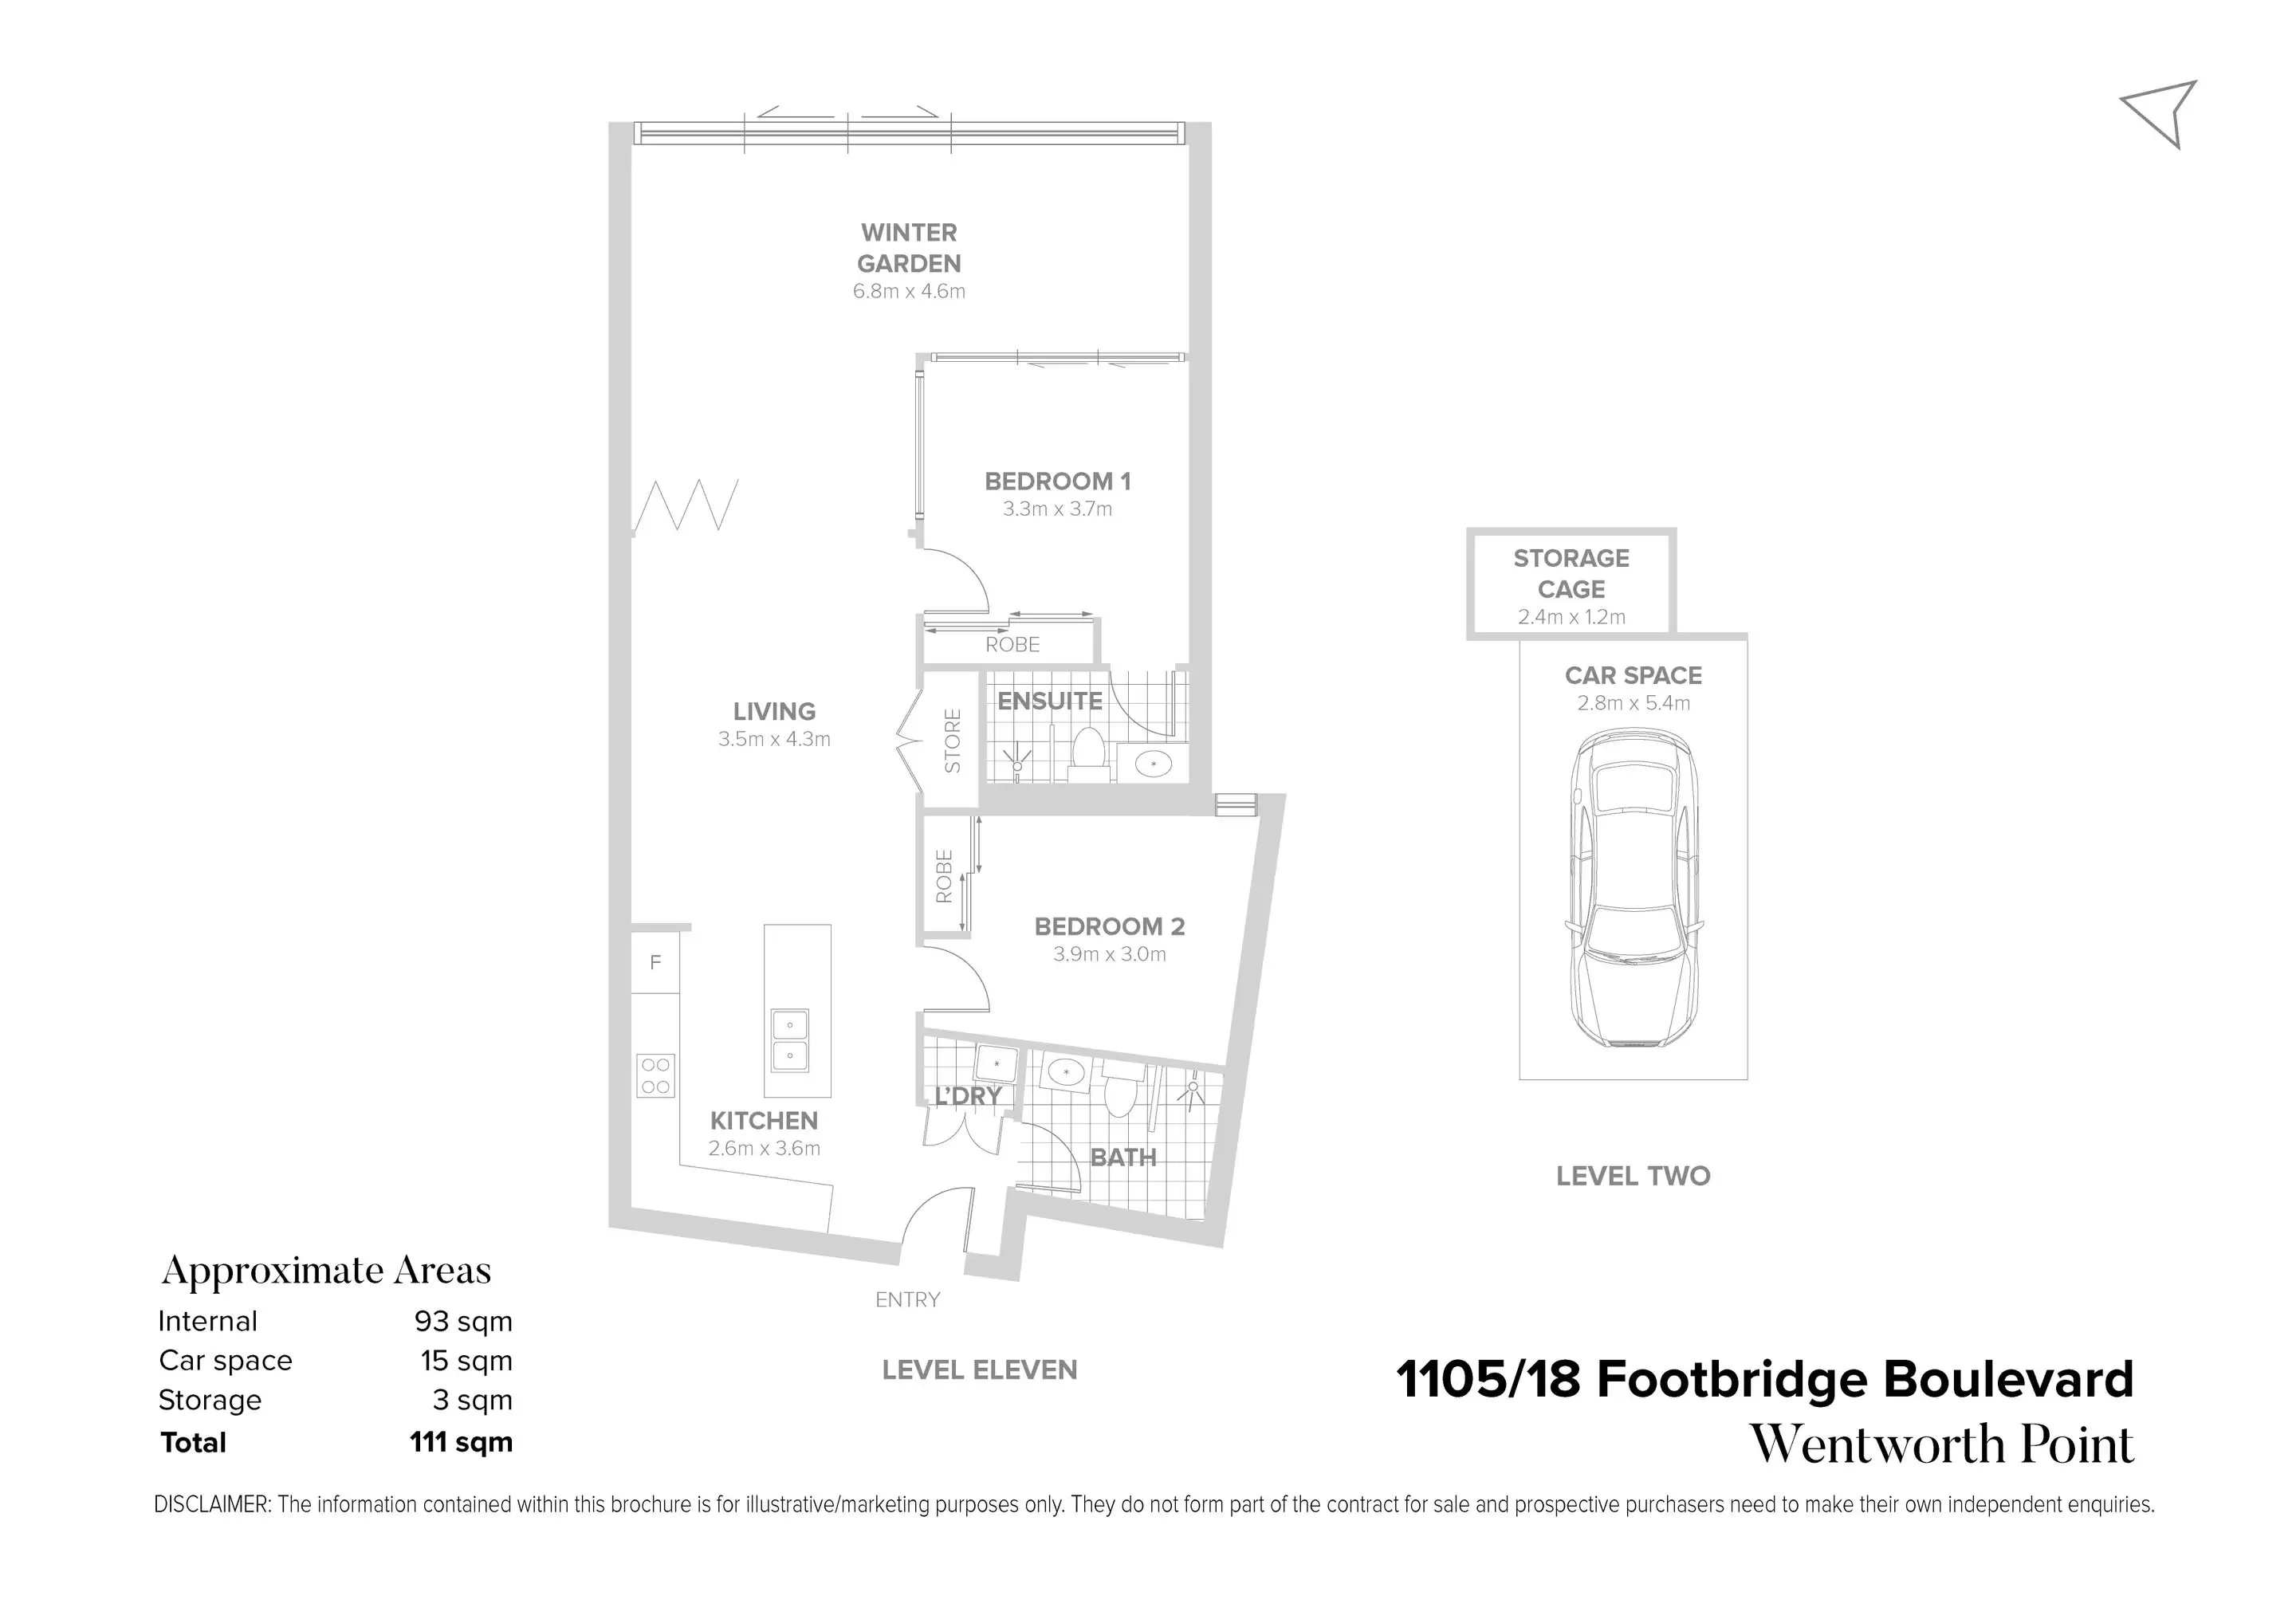 1105/18 Footbridge Boulevard, Wentworth Point Sold by Chidiac Realty - floorplan